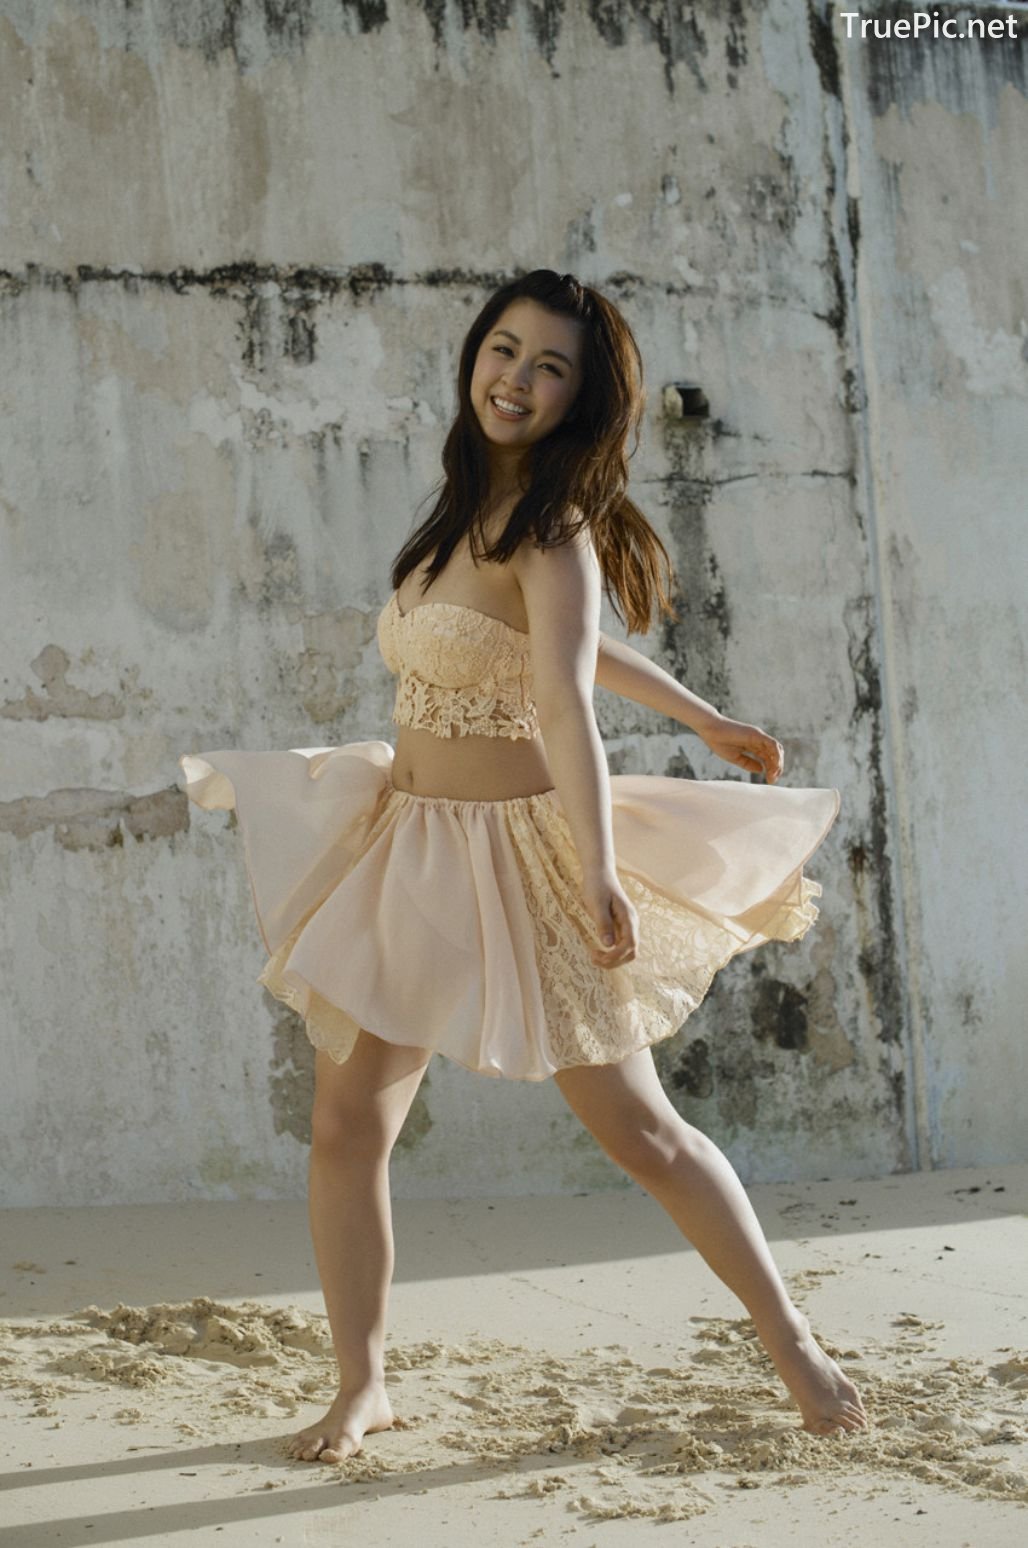 Image-Japanese-Actress-And-Model-Yurina-Yanagi-Blue-Sea-And-Hot-Bikini-Girl-TruePic.net- Picture-20